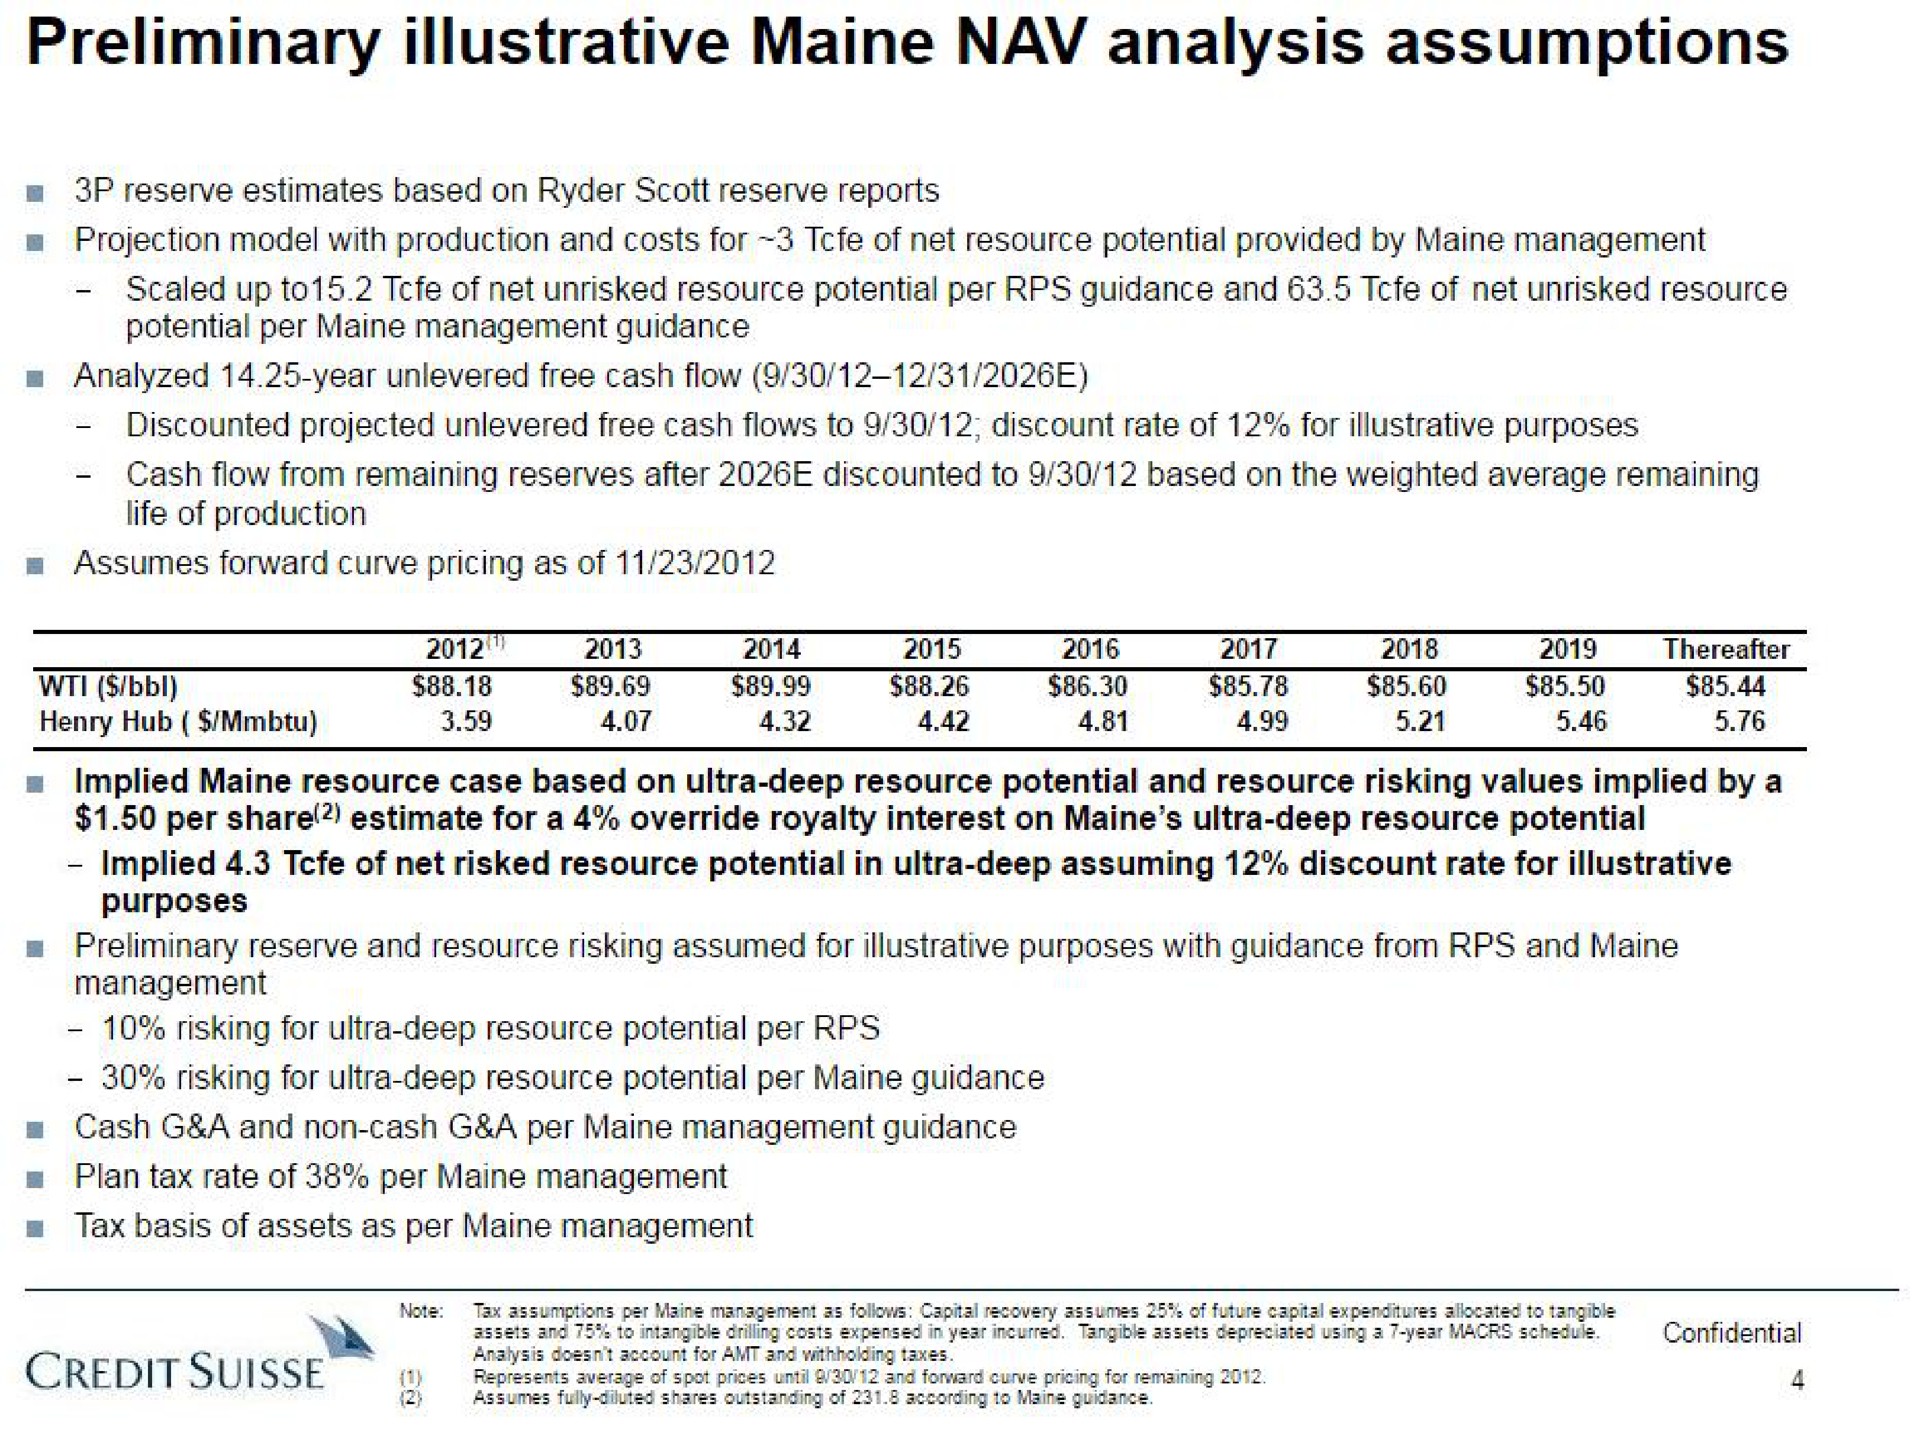 preliminary illustrative analysis assumptions | Credit Suisse